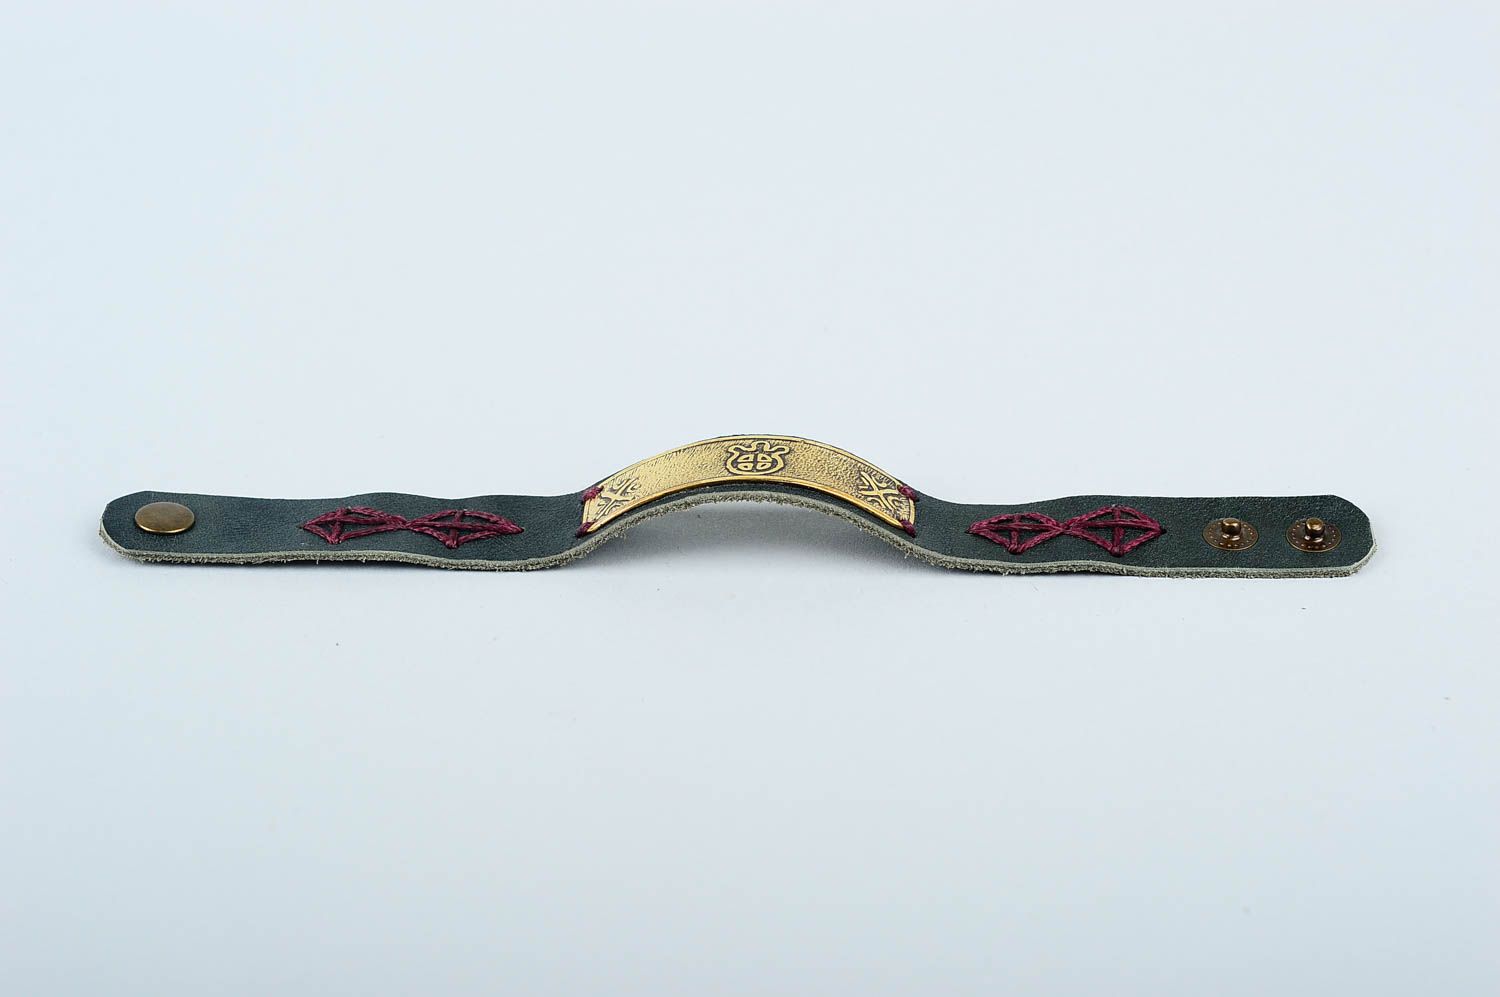 Unusual handmade leather jewelry wrist bracelet designs leather goods gift ideas photo 3